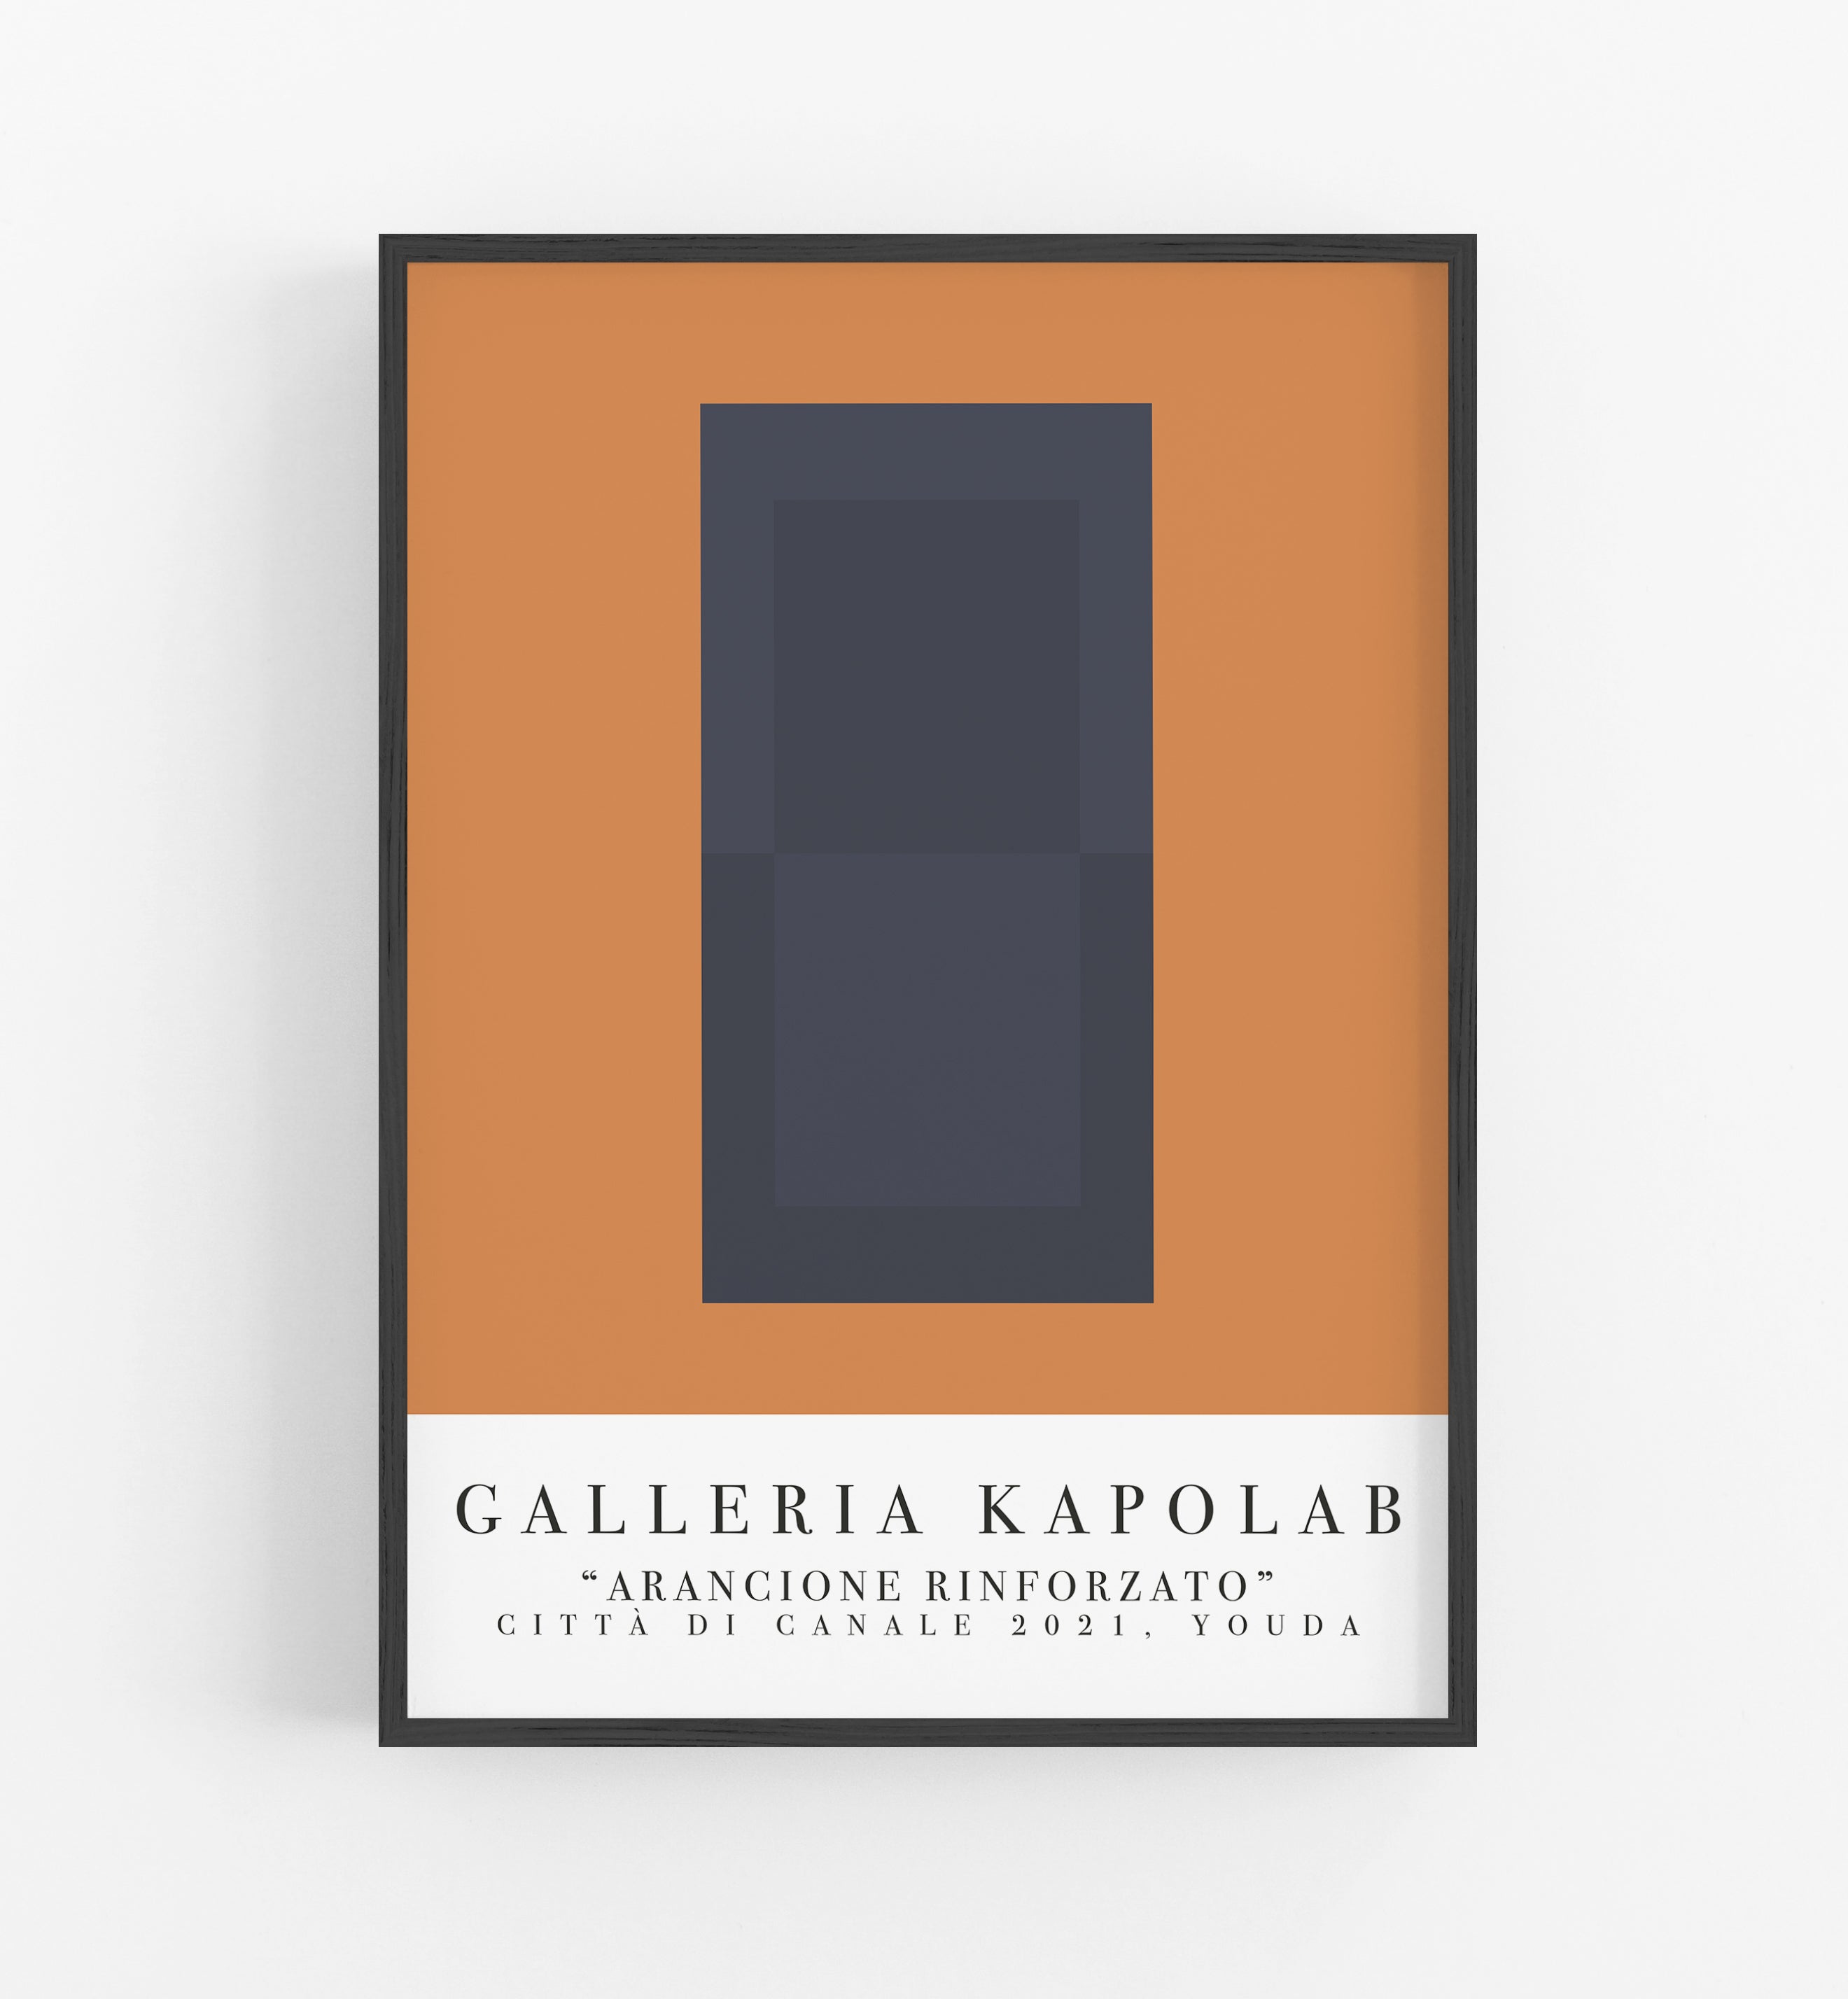 Galleria Kapolab Arancione Rinforzato